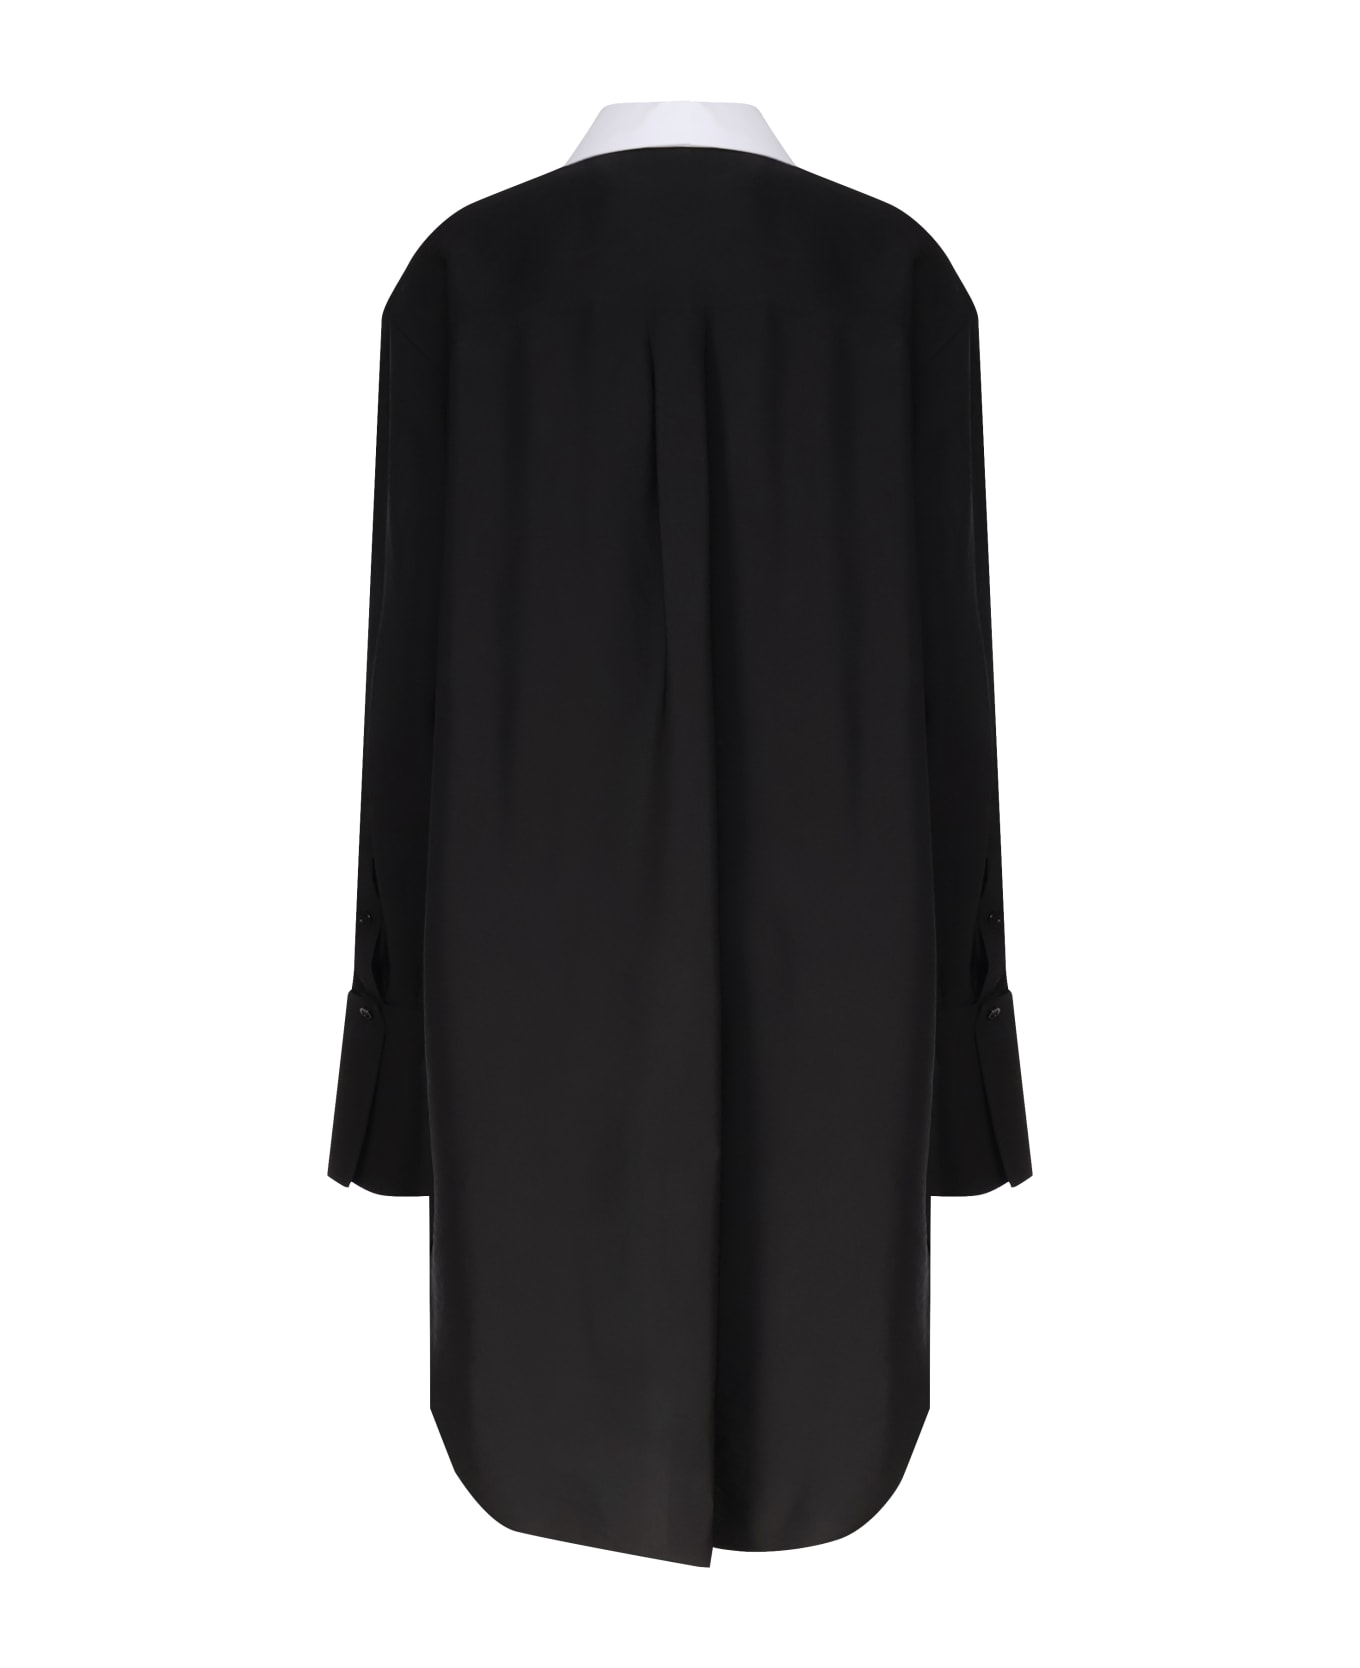 Loewe Shirt Dress - Black